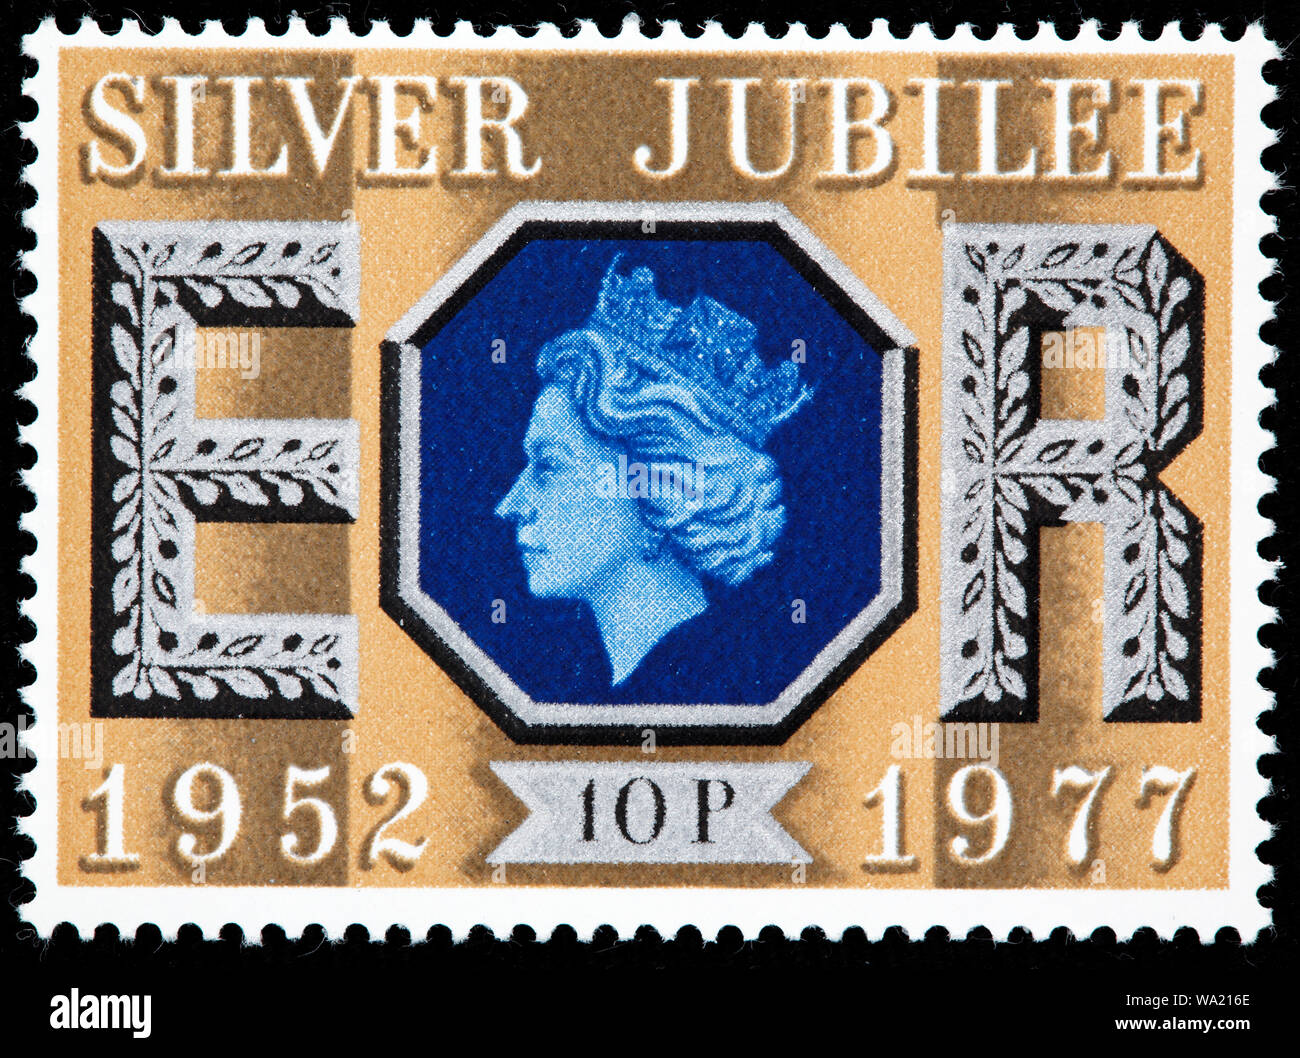 Queen Elizabeth II, Silver jubilee, postage stamp, UK, 1977 Stock Photo -  Alamy